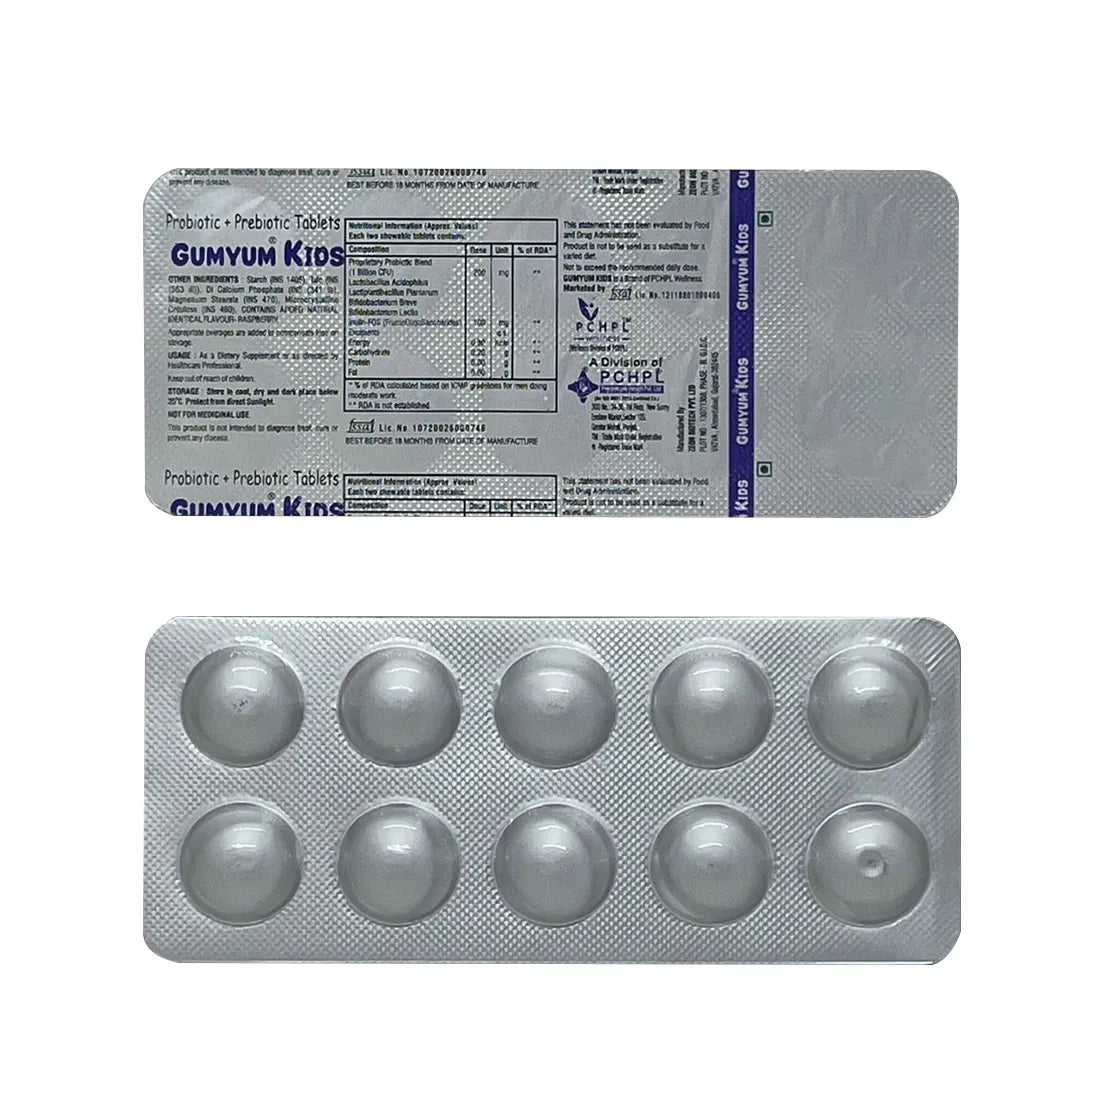 Gumyum Kids Prebiotic & Probiotic Tablets | Sehatokart